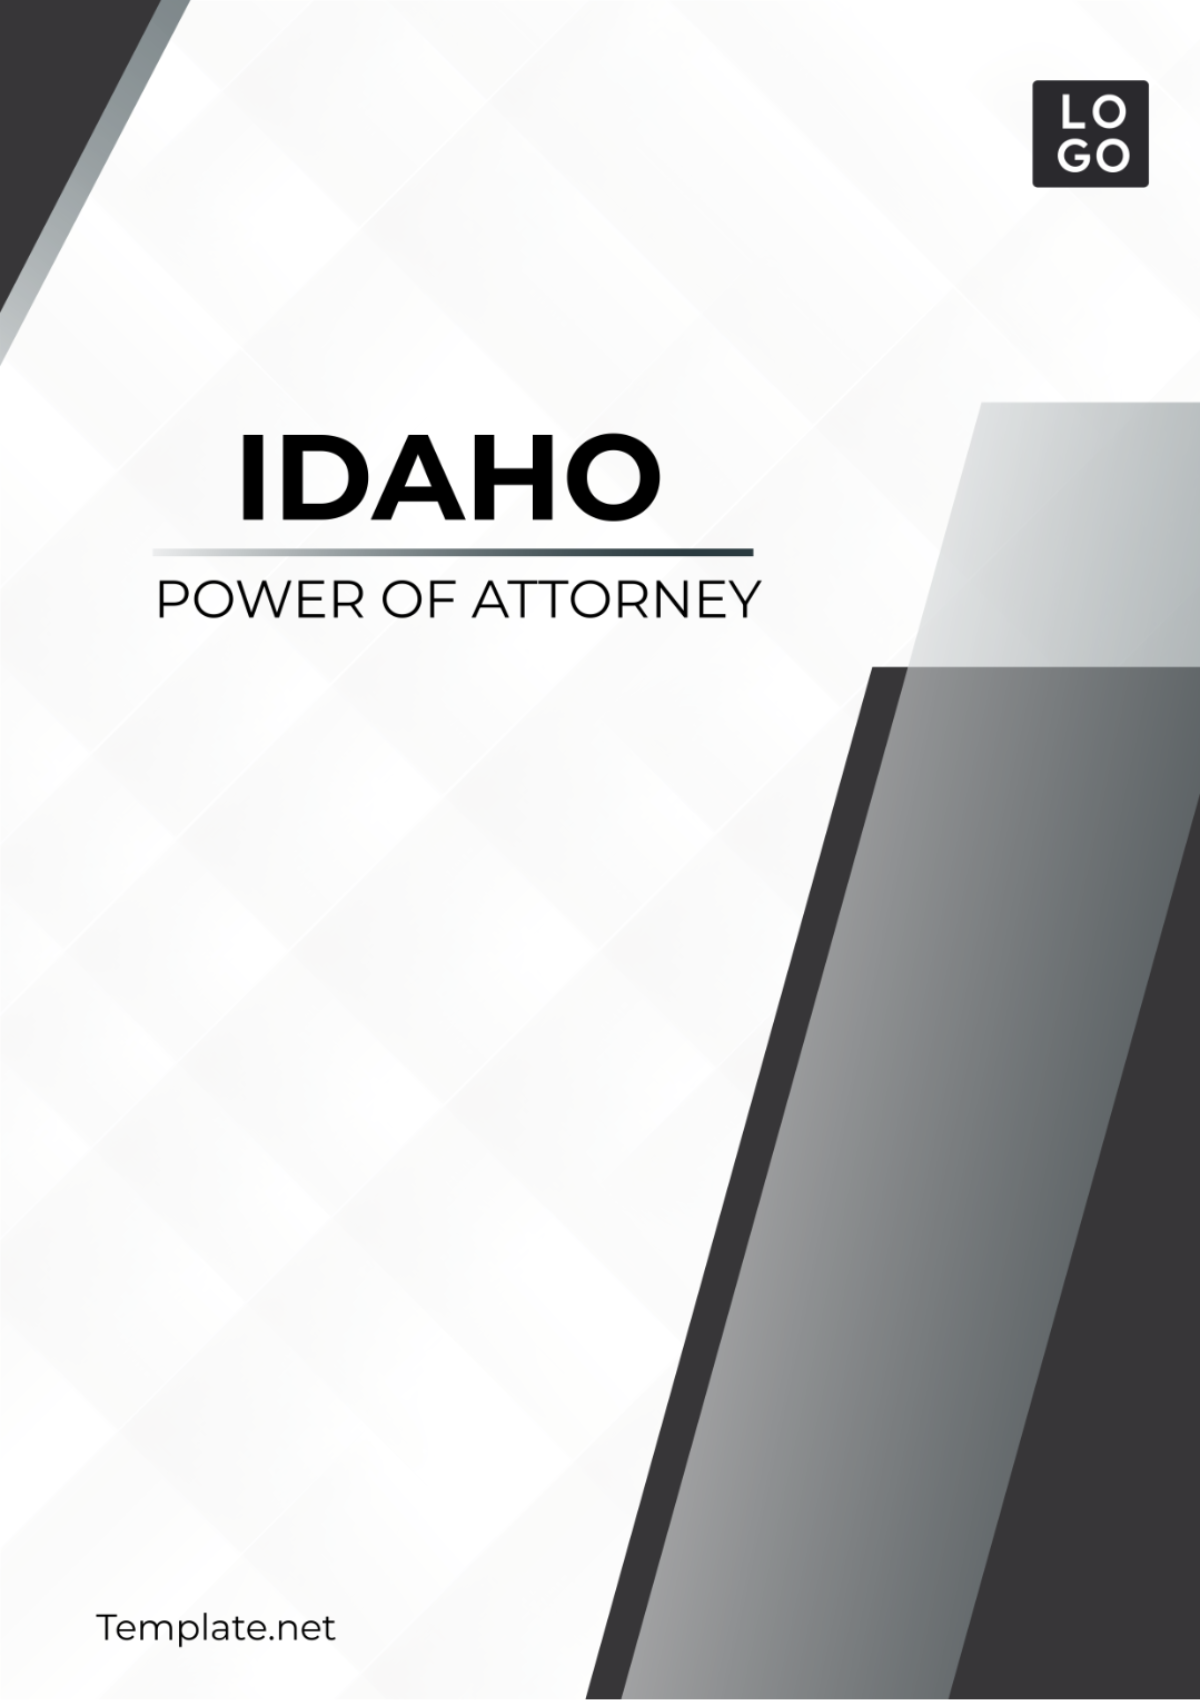 Idaho Power of Attorney Template